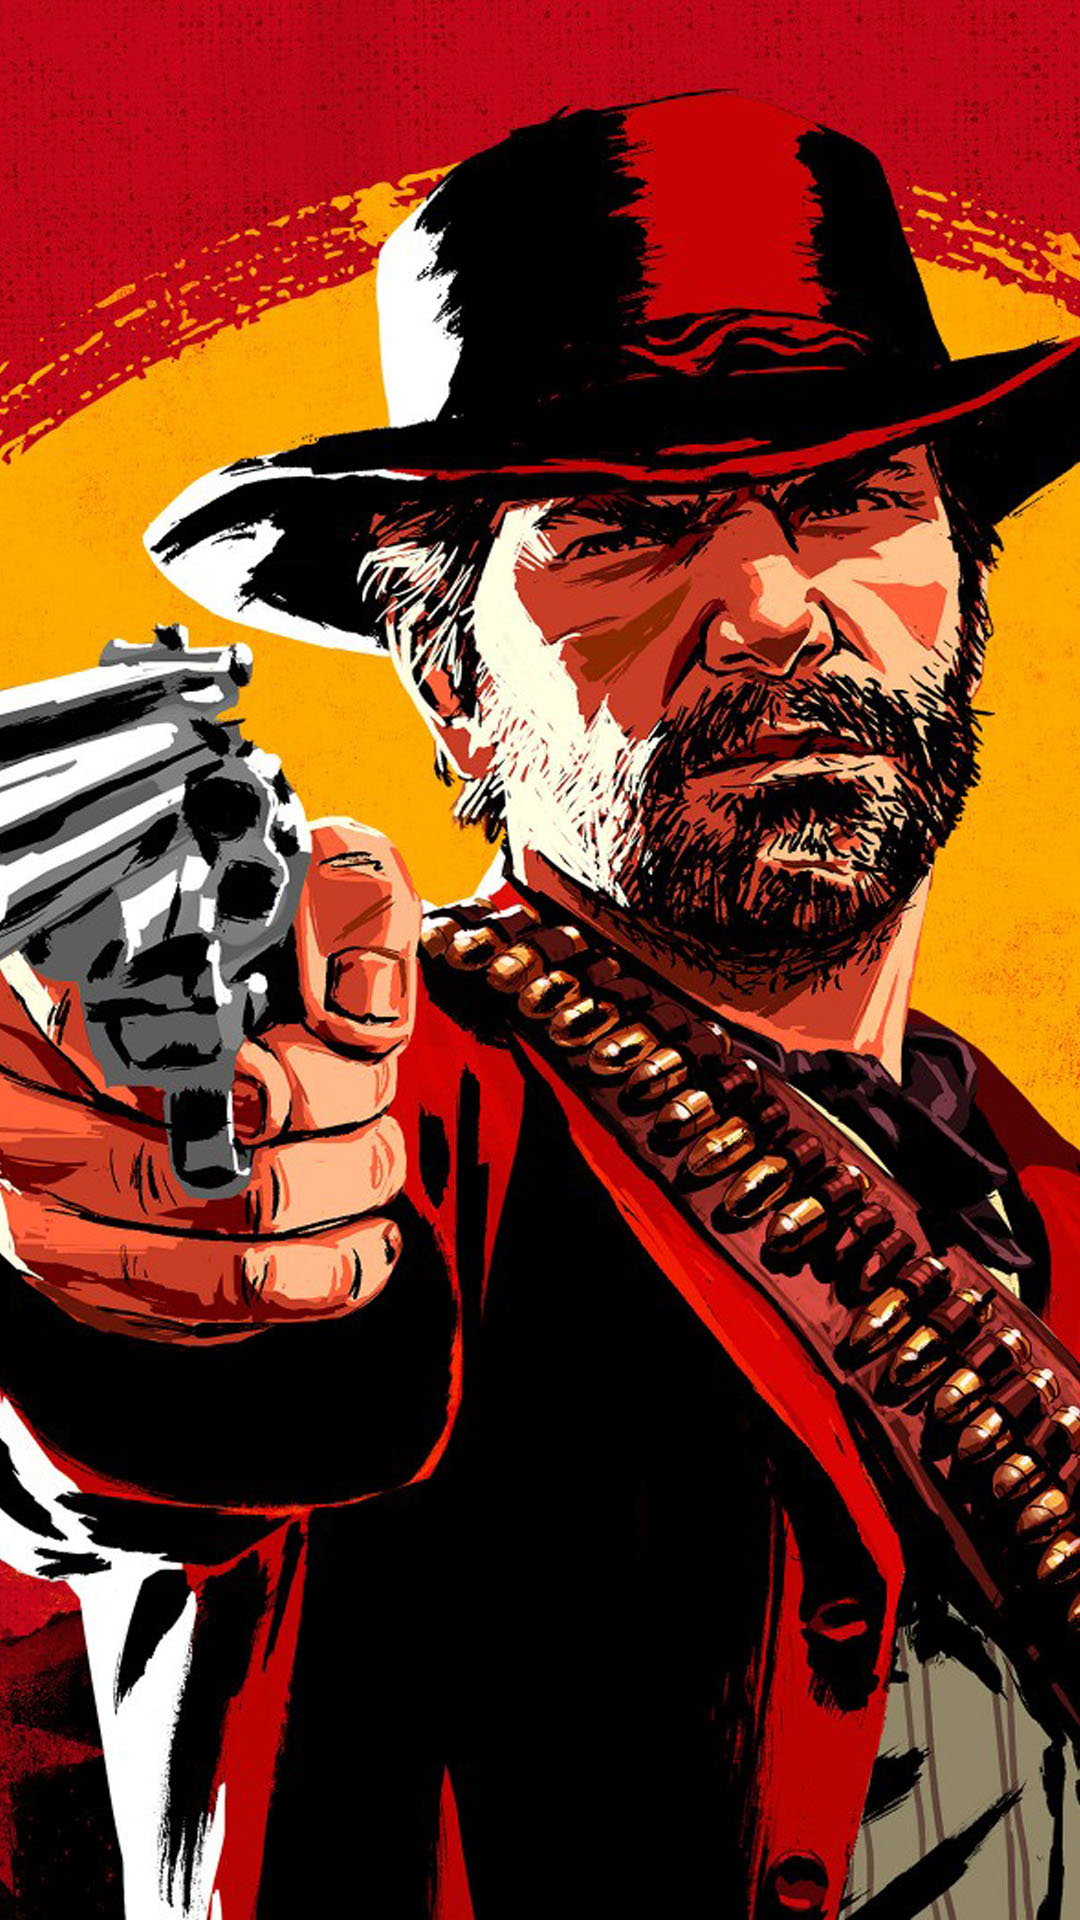 4k Red Dead Redemption 2 Wallpaper